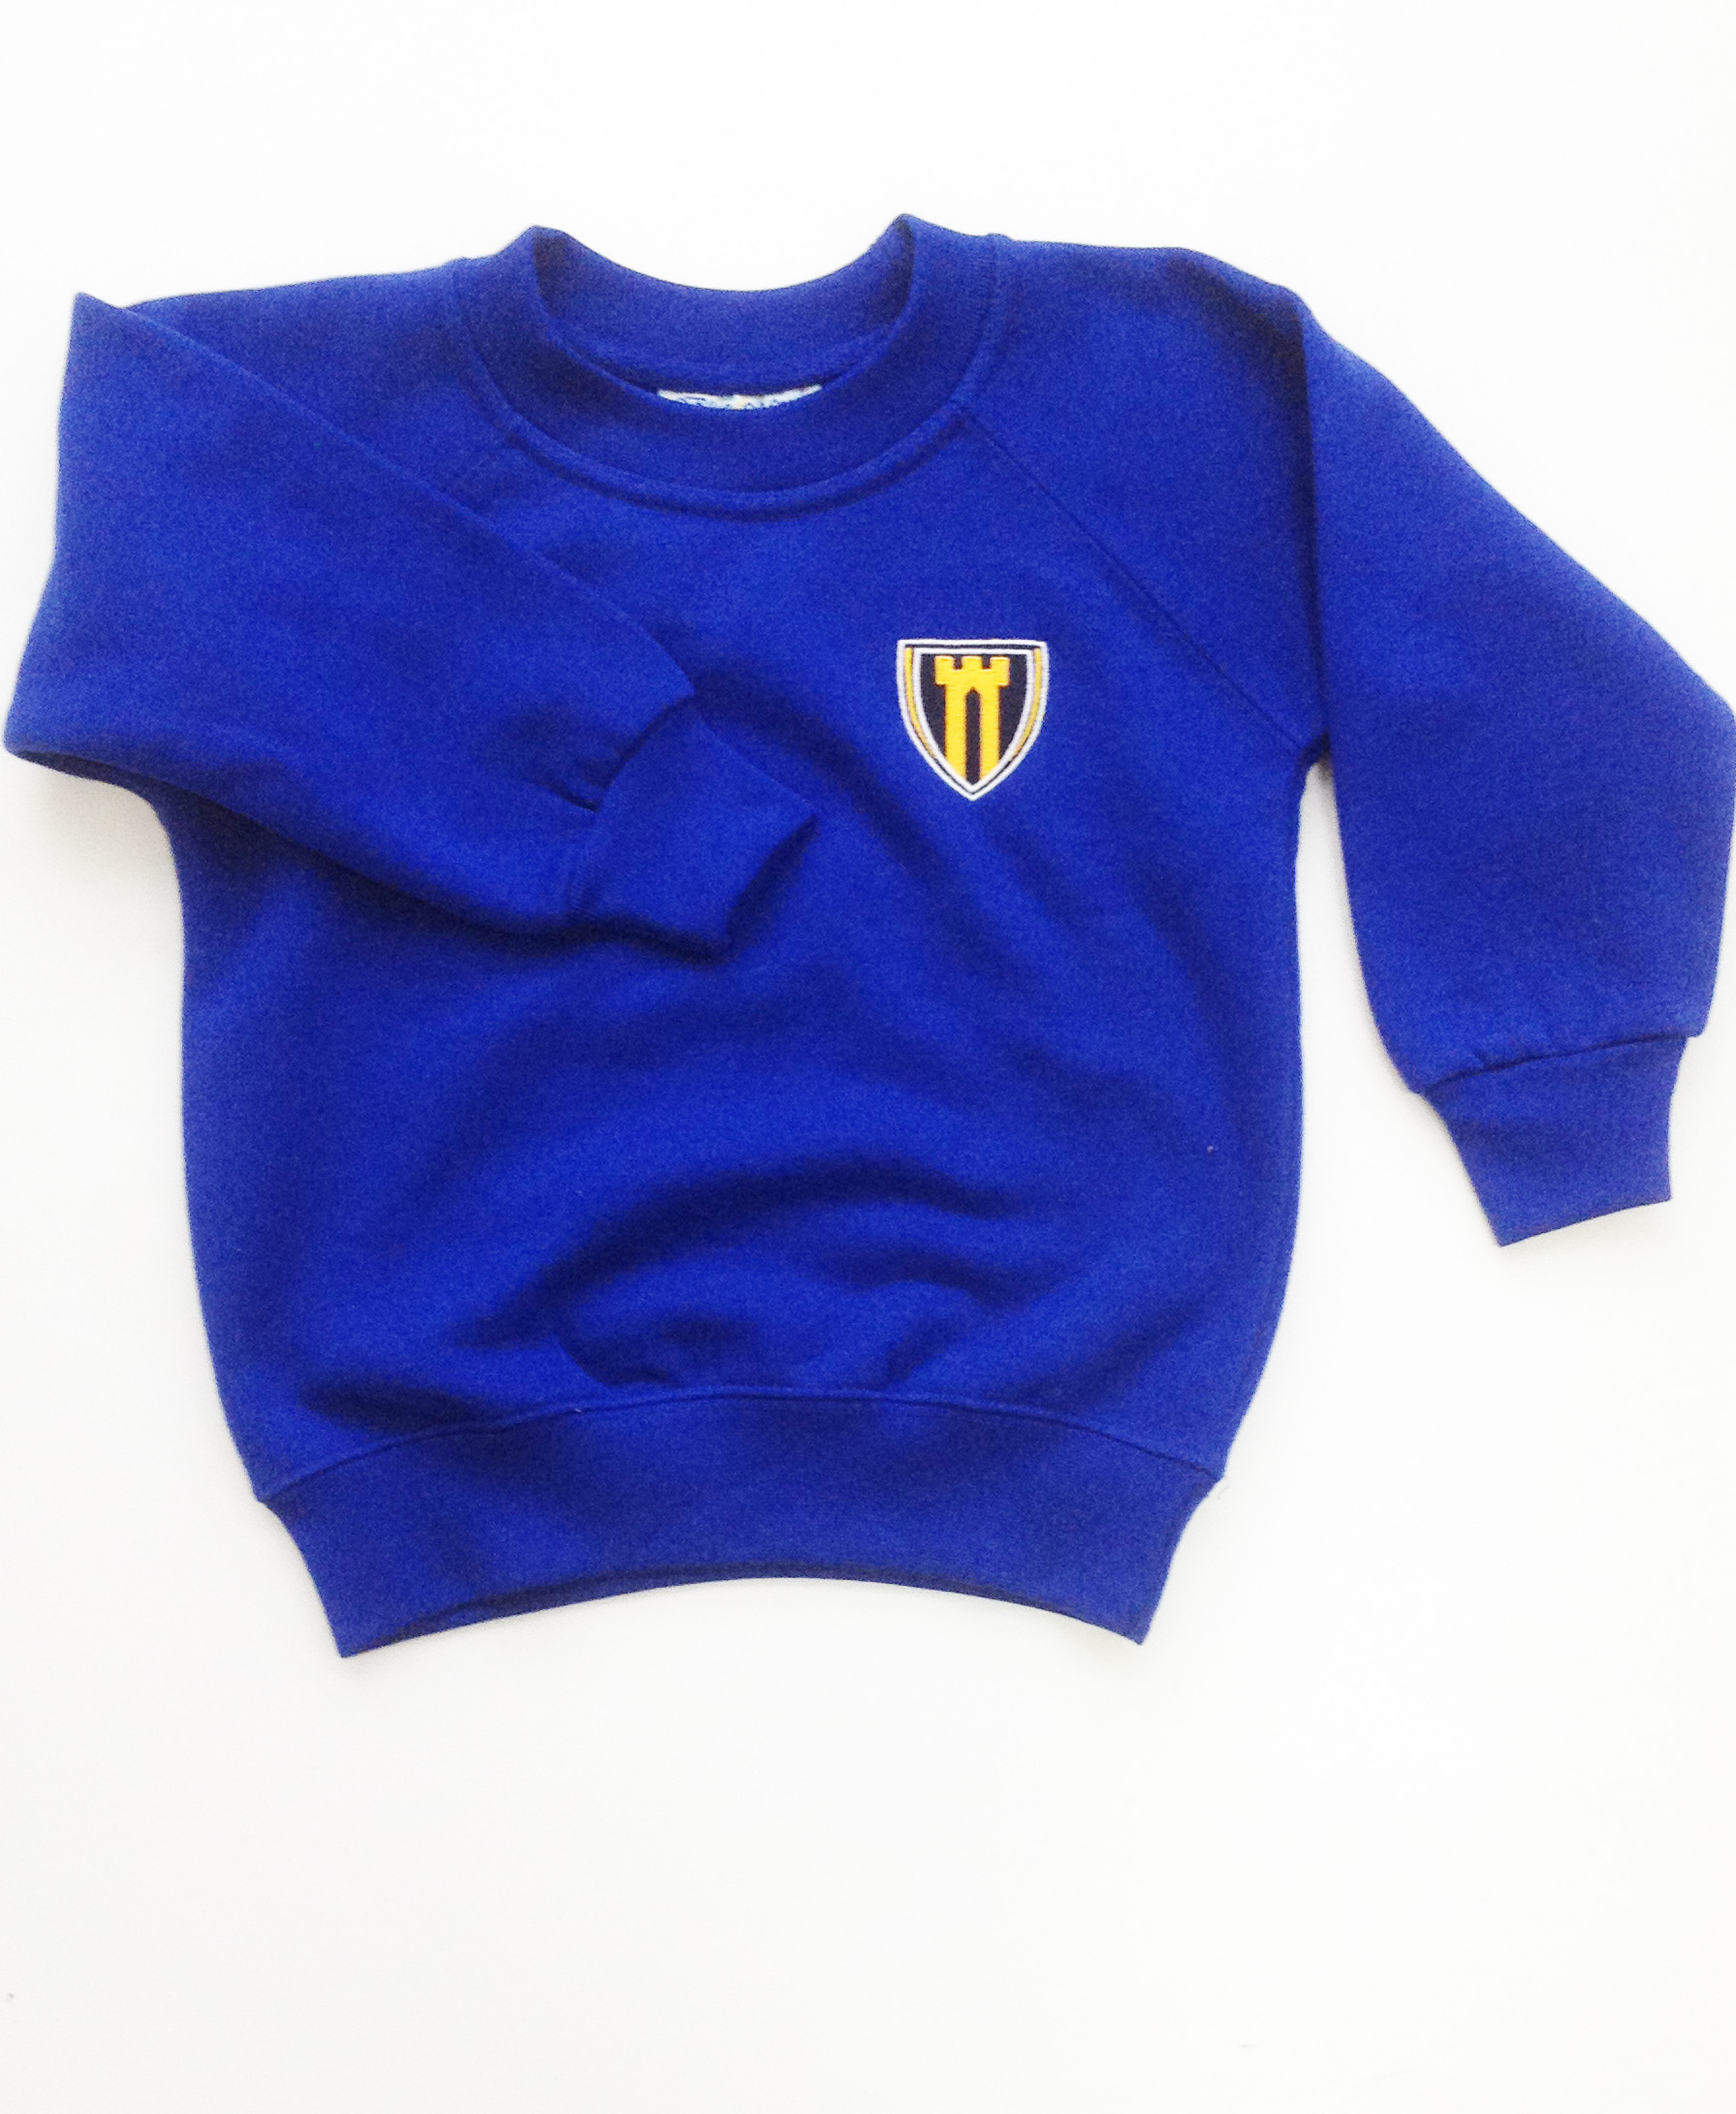 Castle Newnham Primary Sweatshirt (Royal)